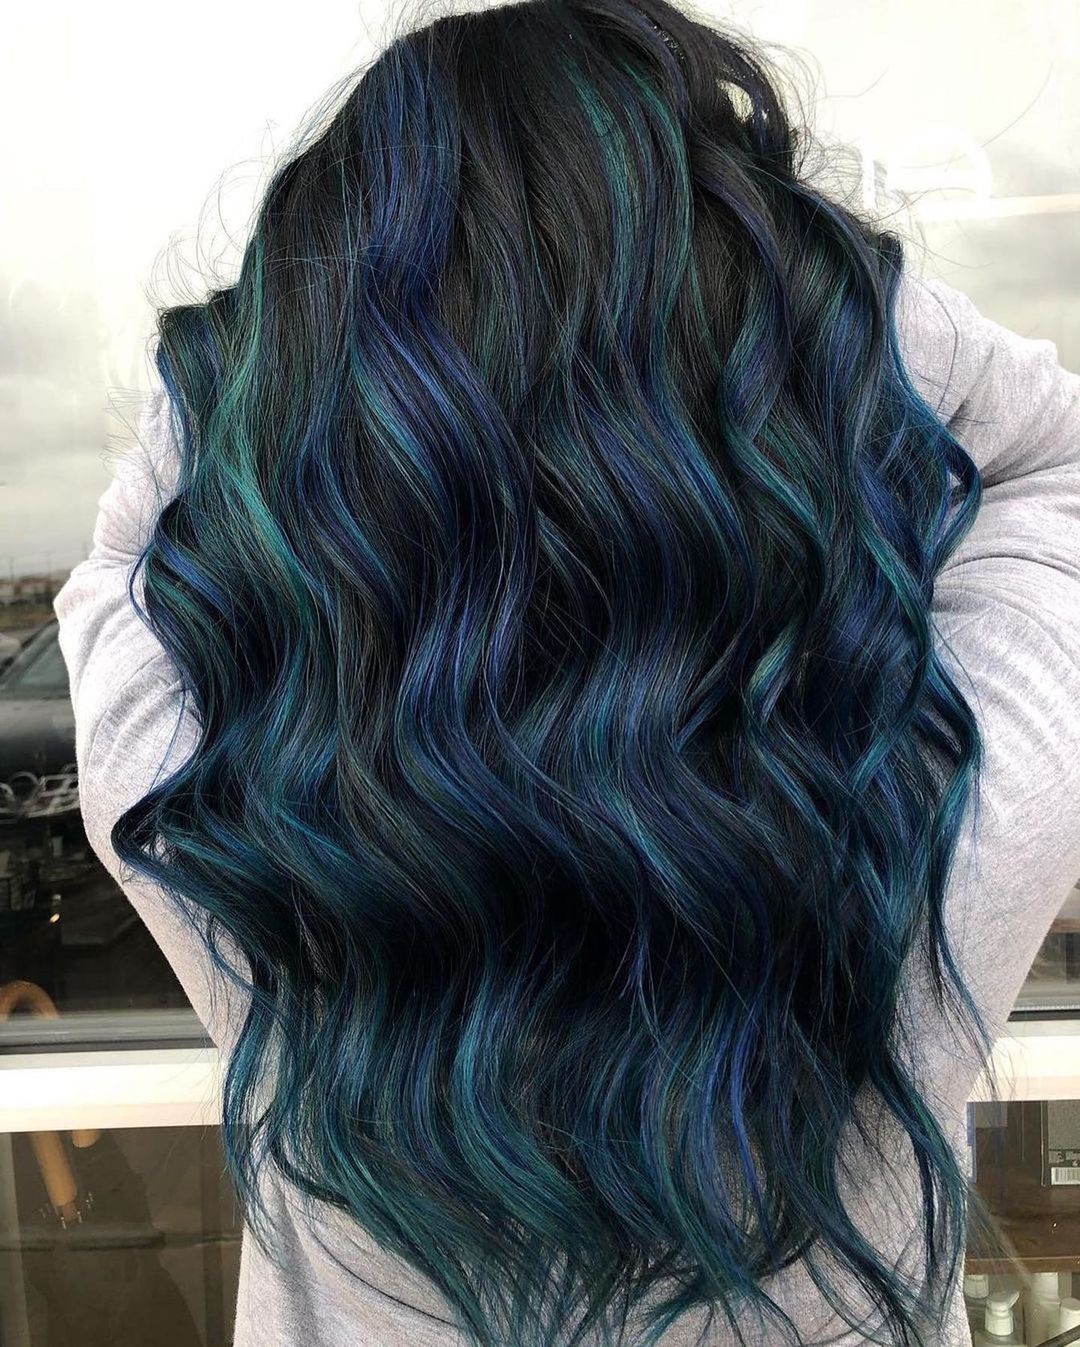 Dark Mermaid Hair with Blue and Green Highlights